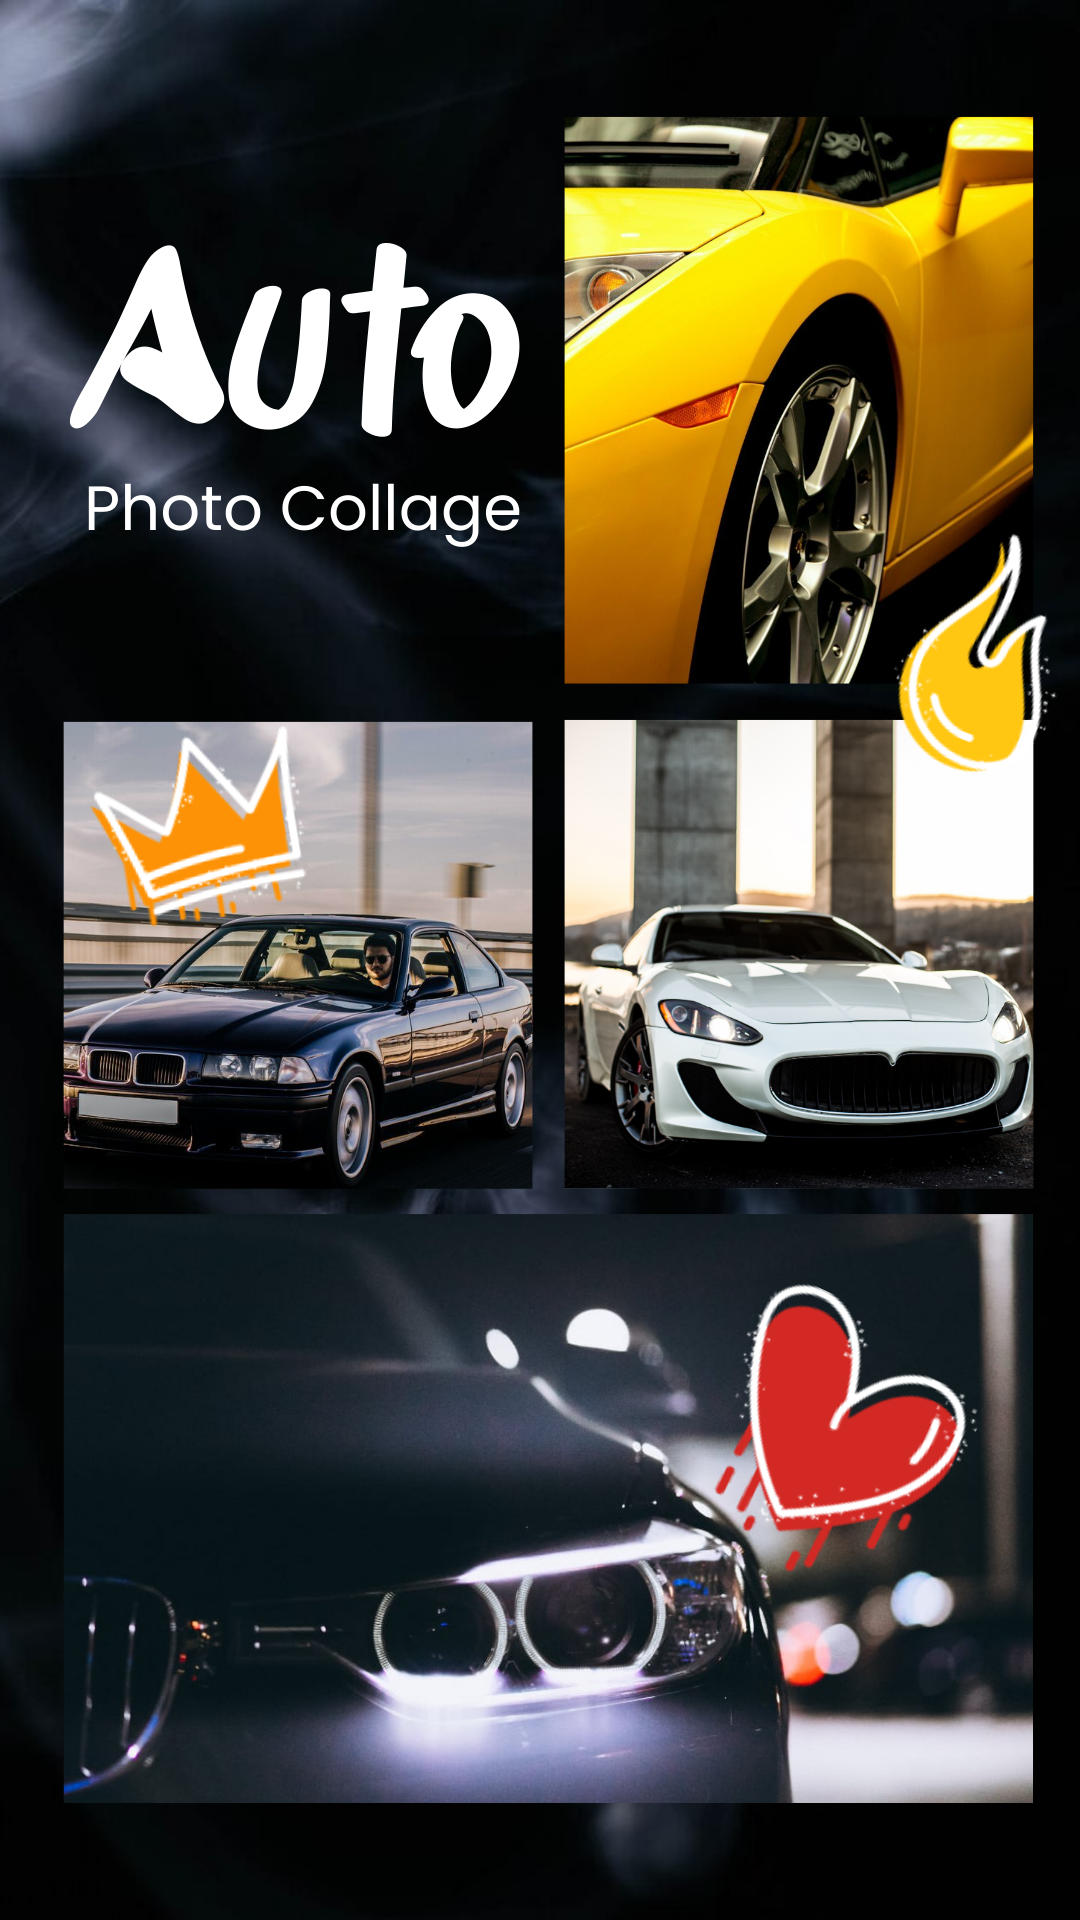 Auto Photo Collage Template